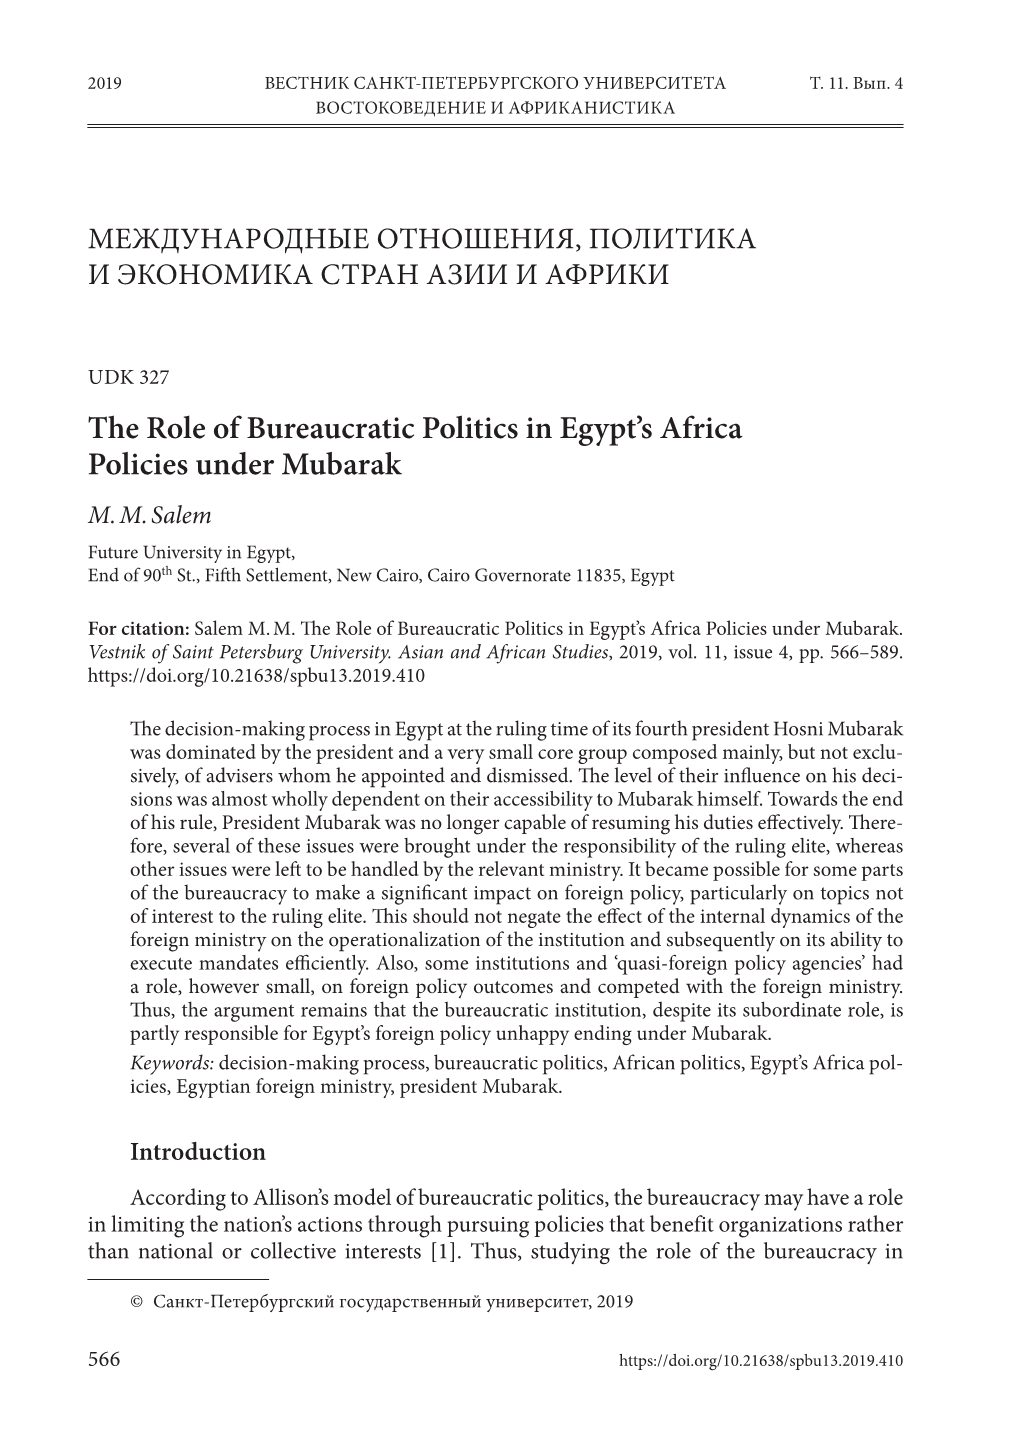 The Role of Bureaucratic Politics in Egypt's Africa Policies Under Mubarak